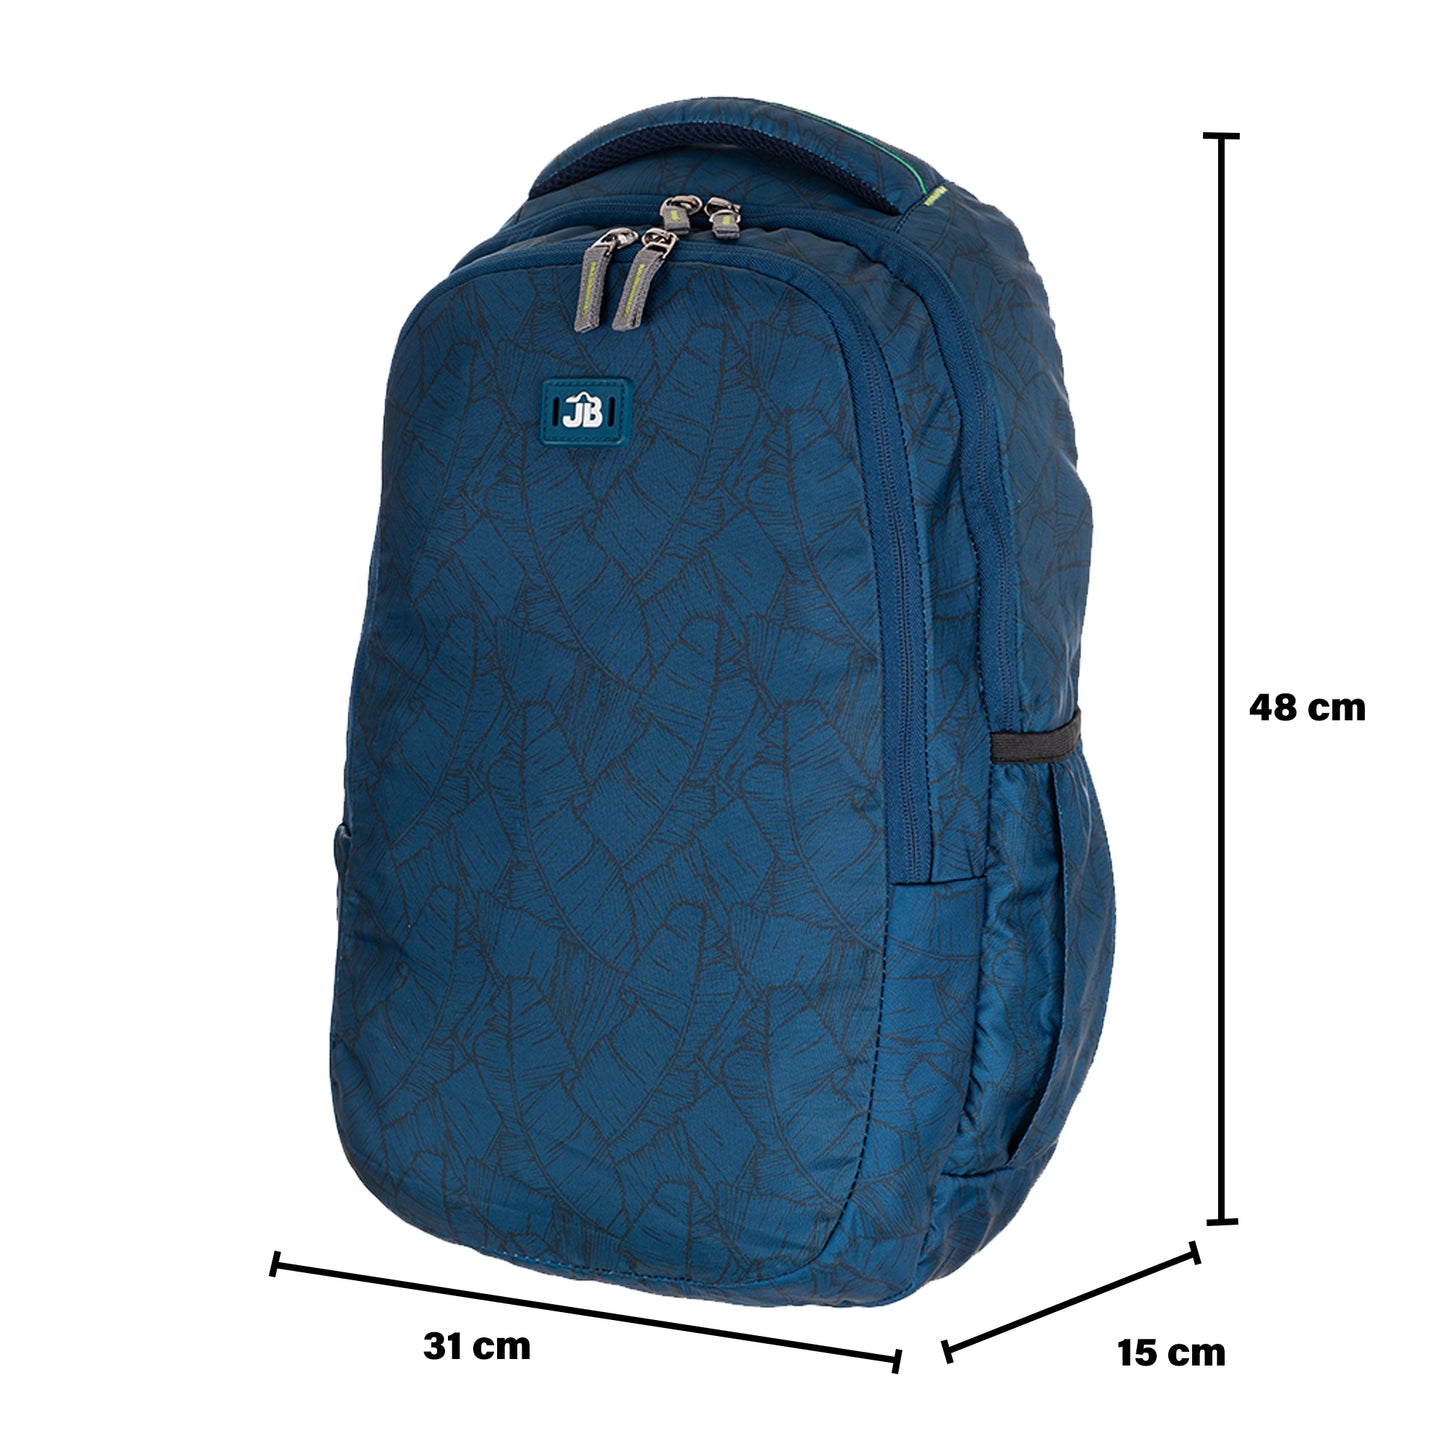 Horizon Unisex Sleek Laptop Backpack (New Blue)